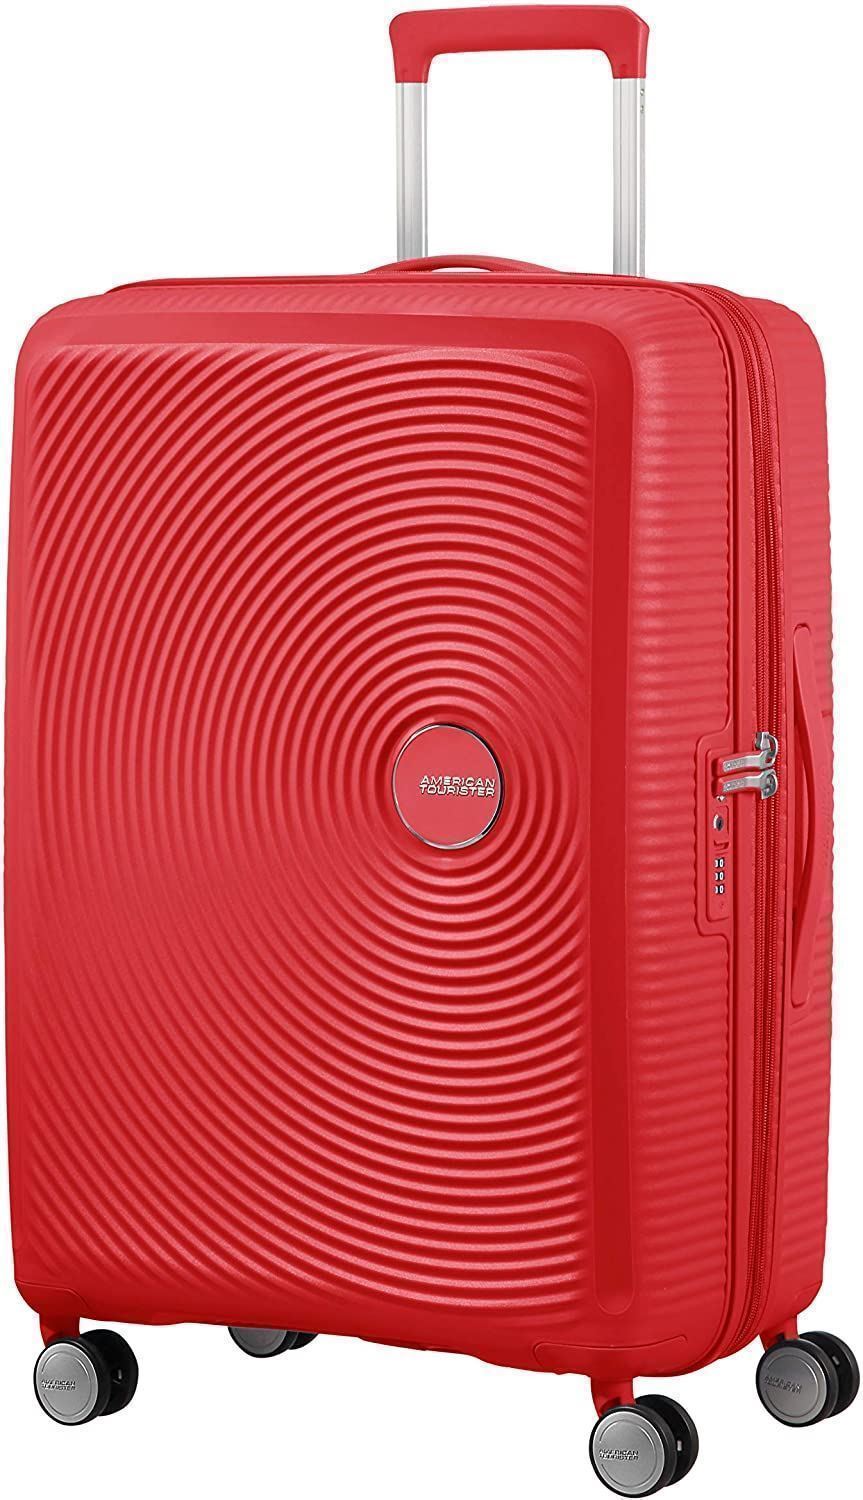 American Tourister Soundbox Maleta Rígida Mediana Expandible Color Rojo 3 Años de Garantía - Imagen 1